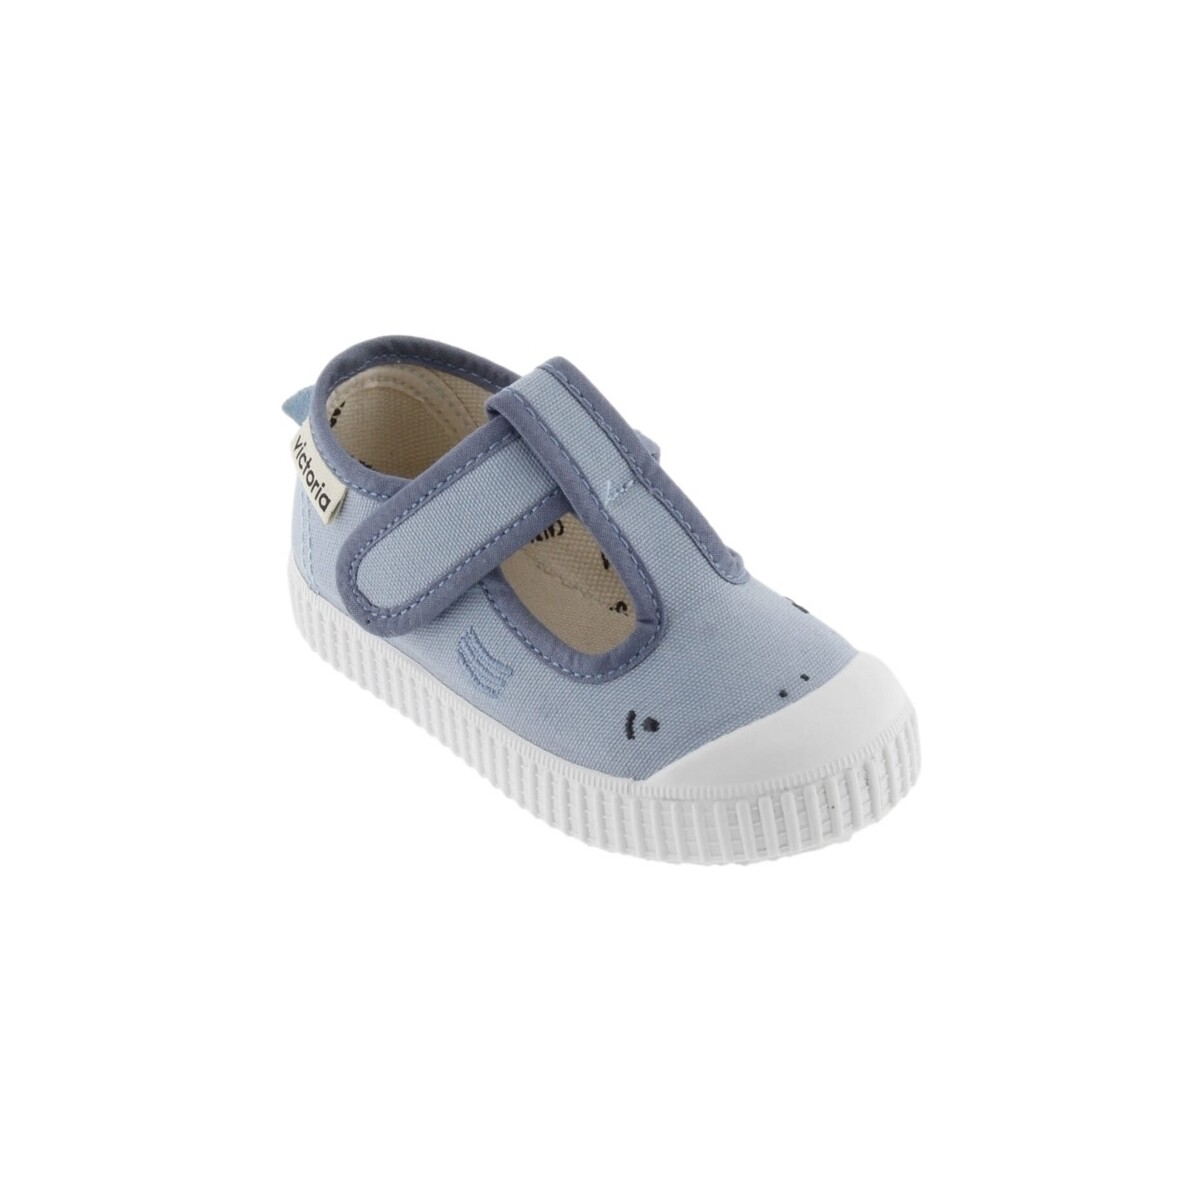 Victoria Bleu Baby Sandals 366158 - Glaciar pYzBFjSd